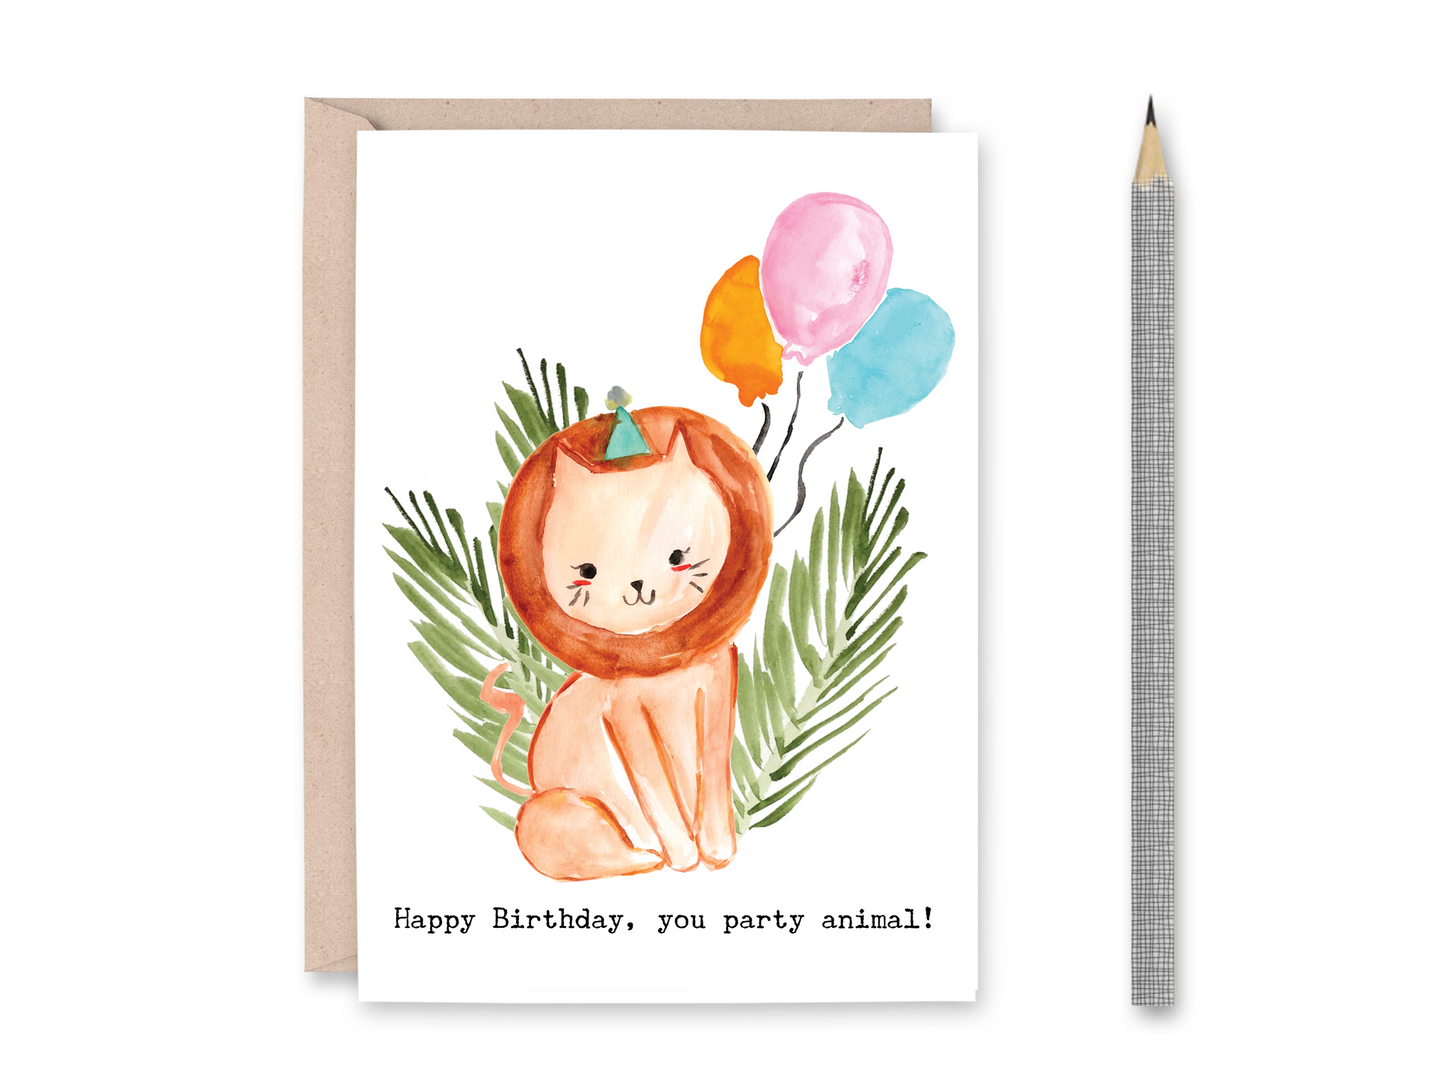 Party Animal Birthday Card Set of 5 - Giraffe, Elephant, Lion, Monkey, Rhino Printable - Digital Download